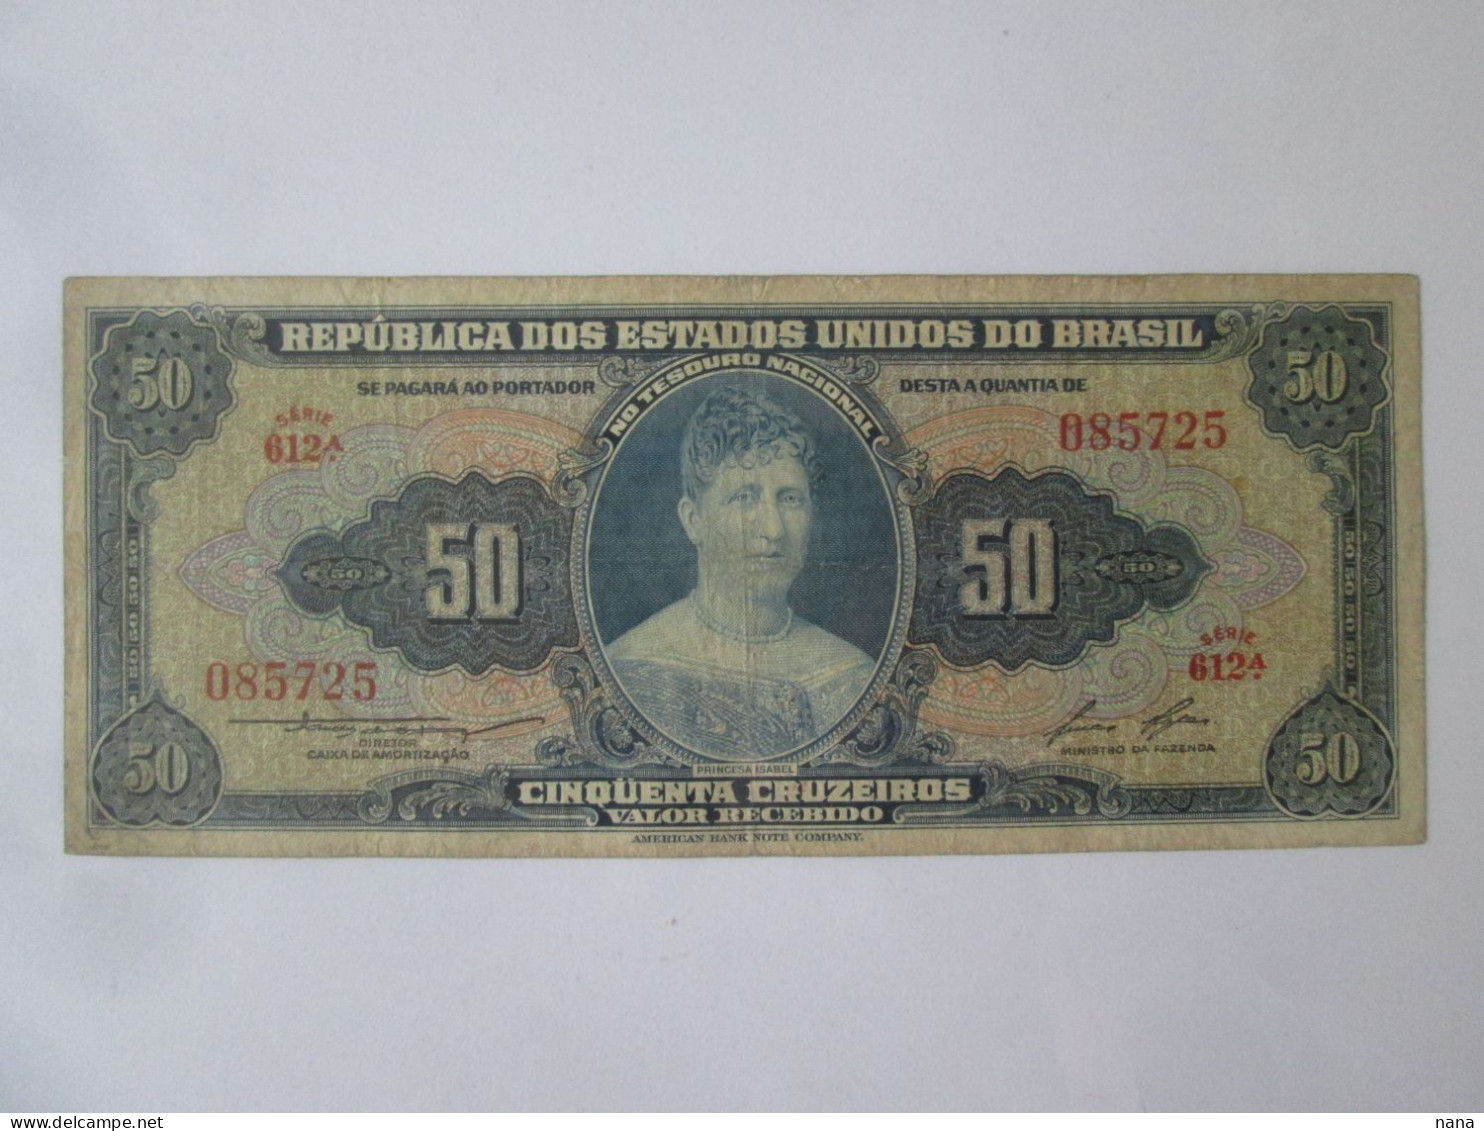 Rare! Brazil 50 Cruzeiros 1956 Banknote,see Pictures - Brazil